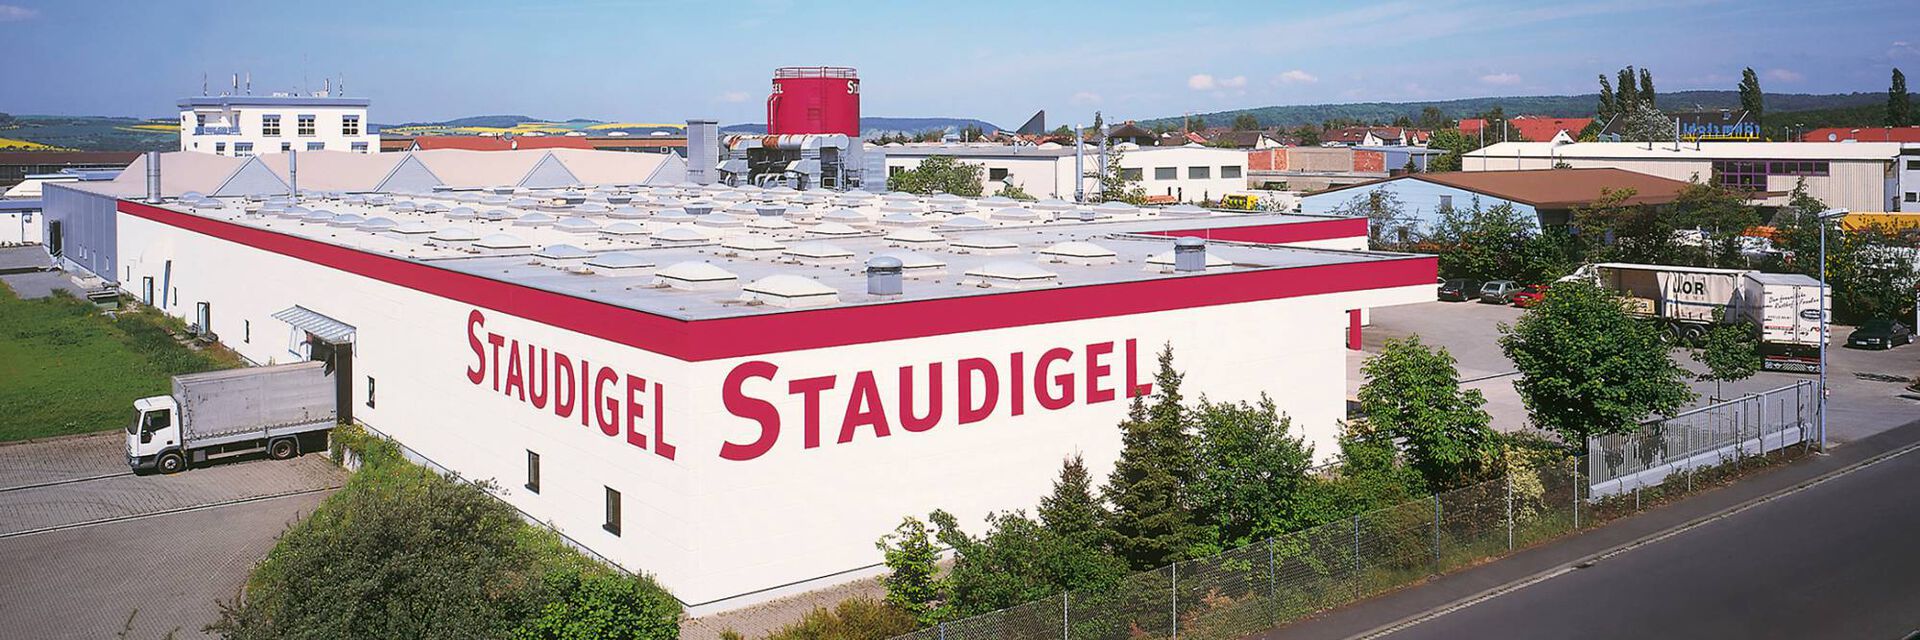 Staudigel company building